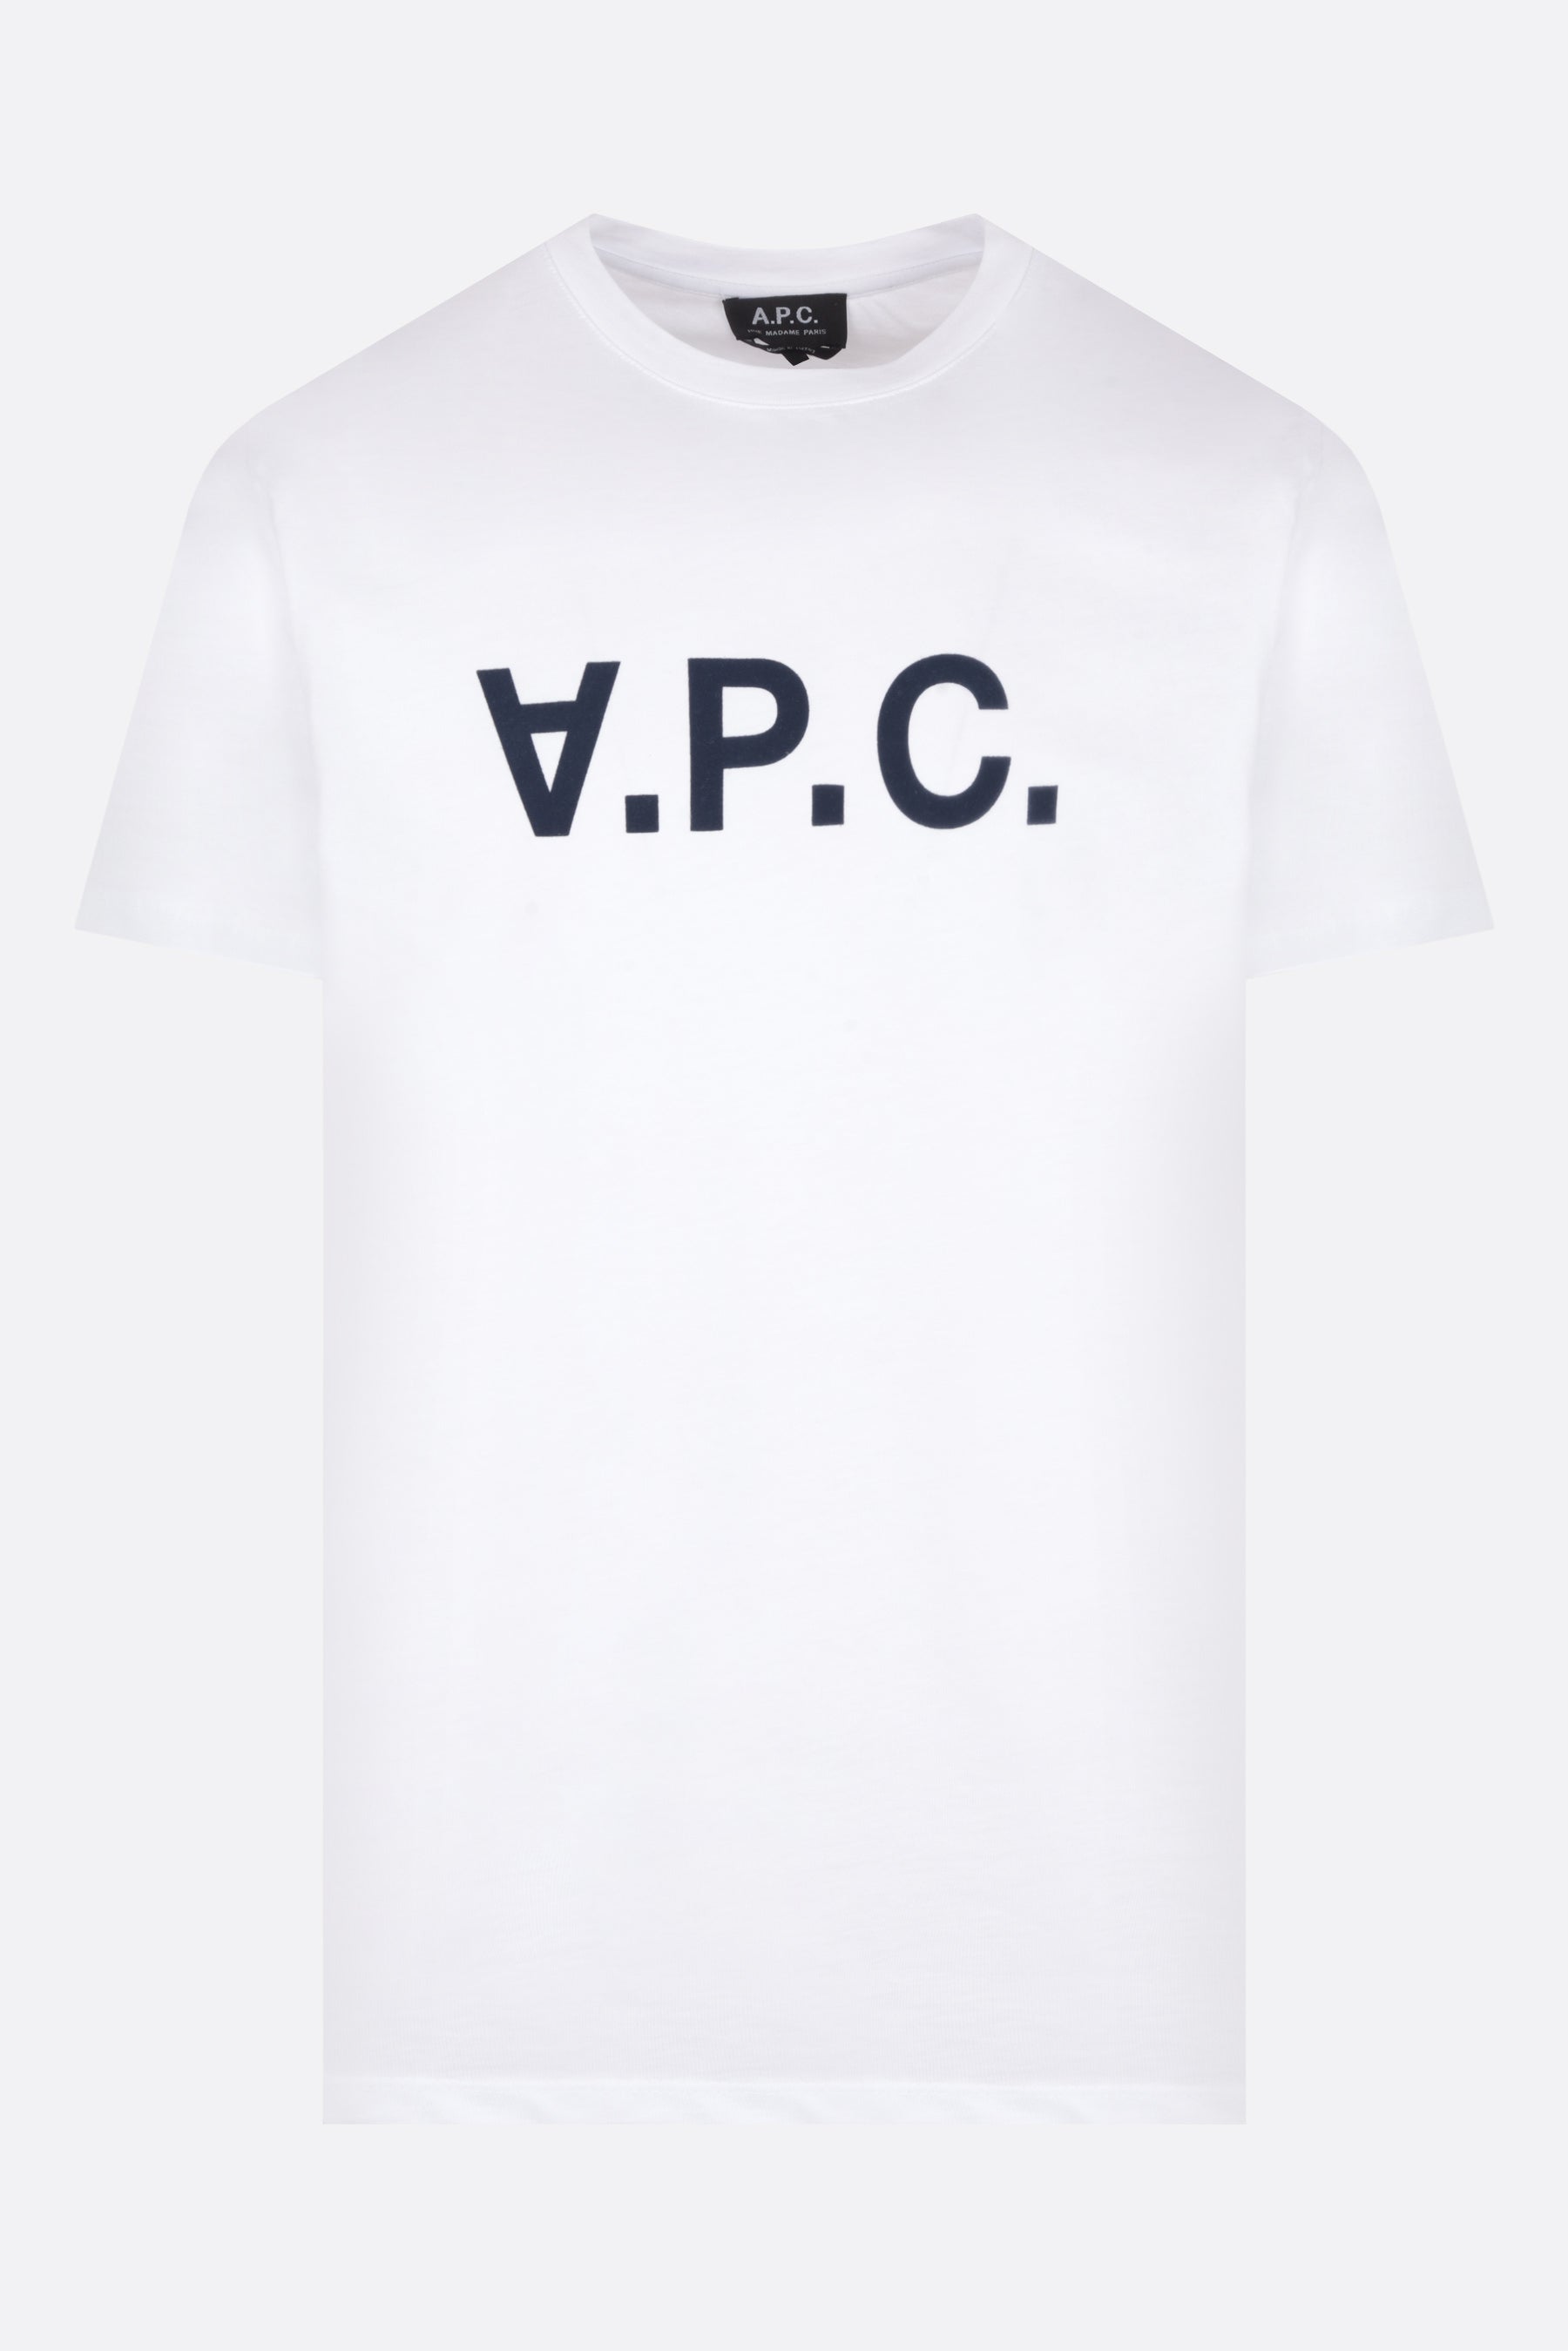 VPC cotton t-shirt